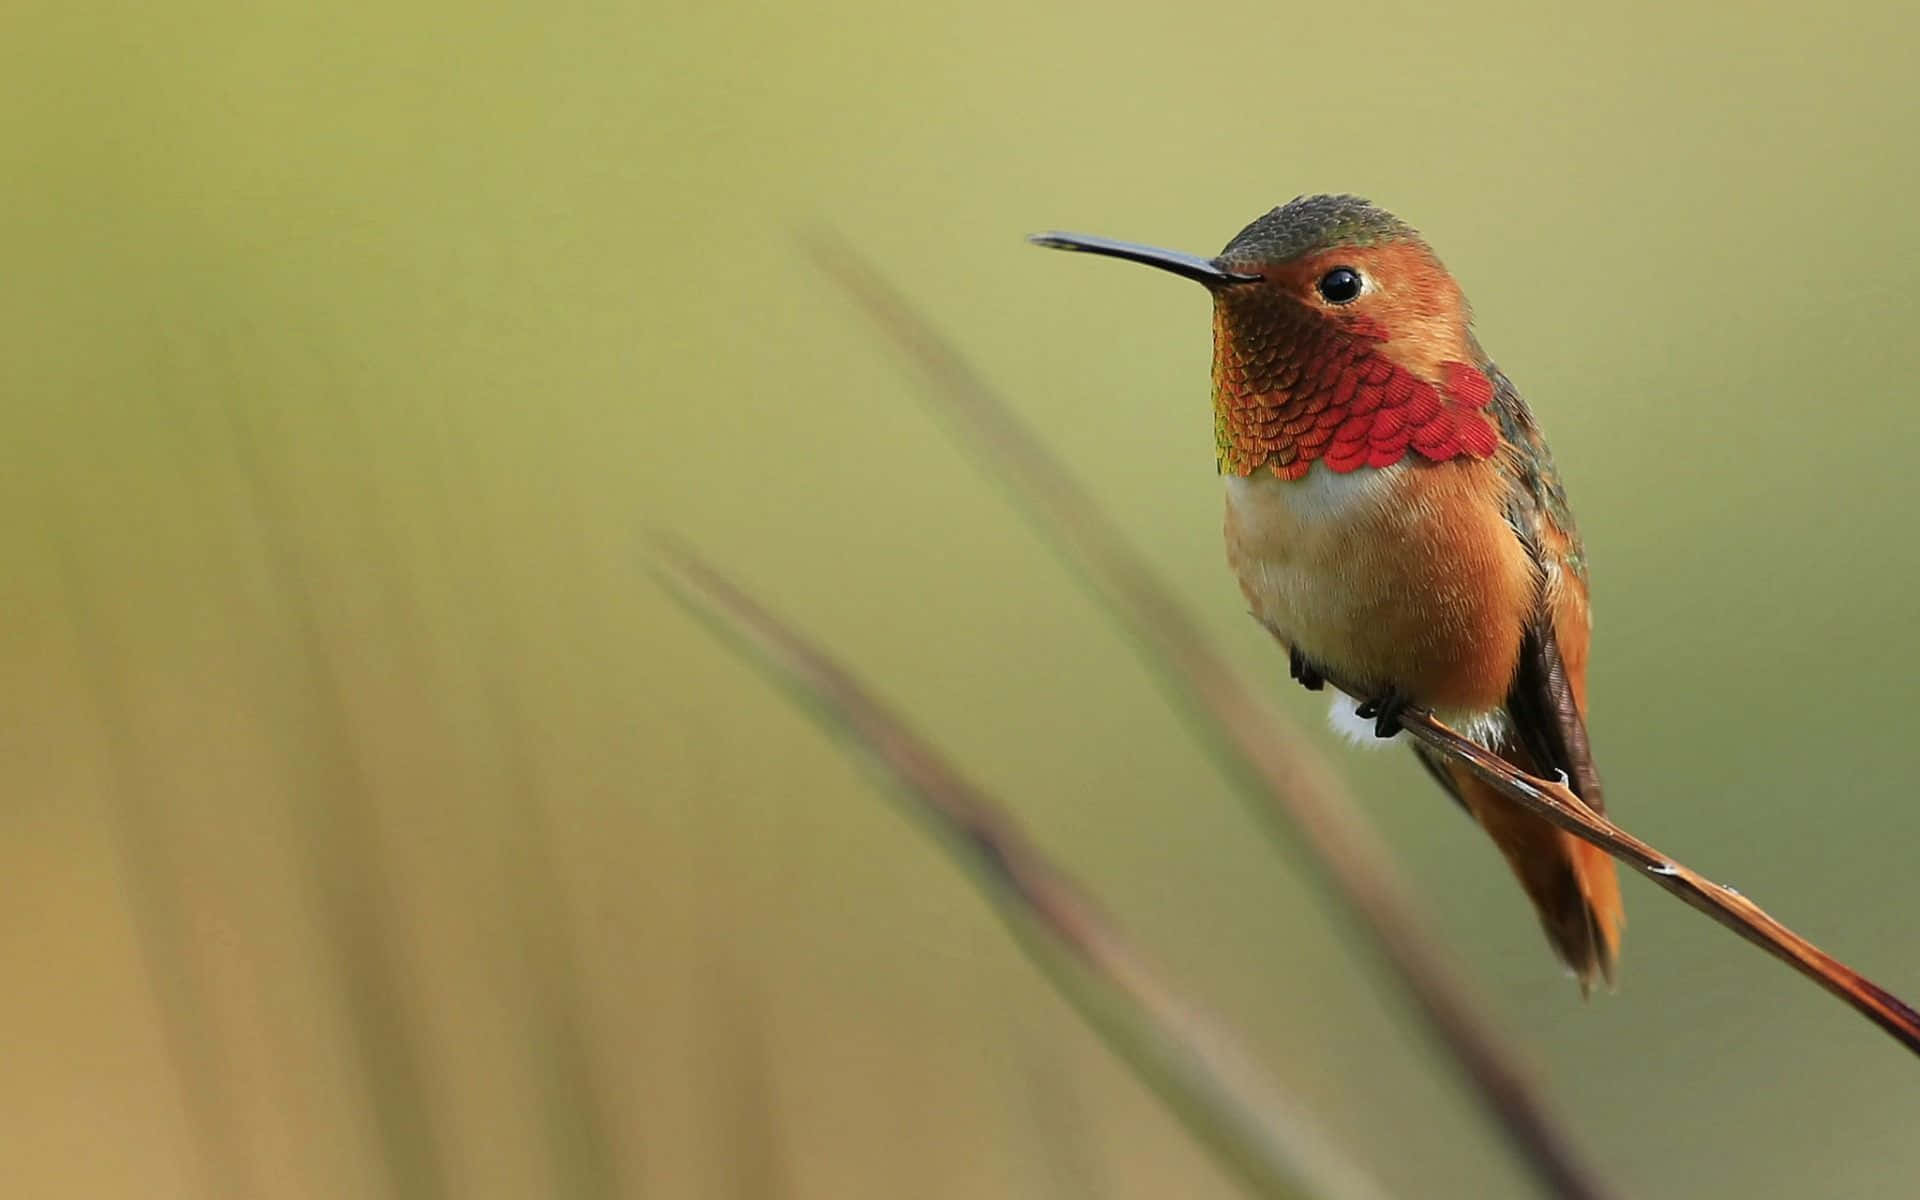 Vibrant Hummingbird In Flight Against Green Background